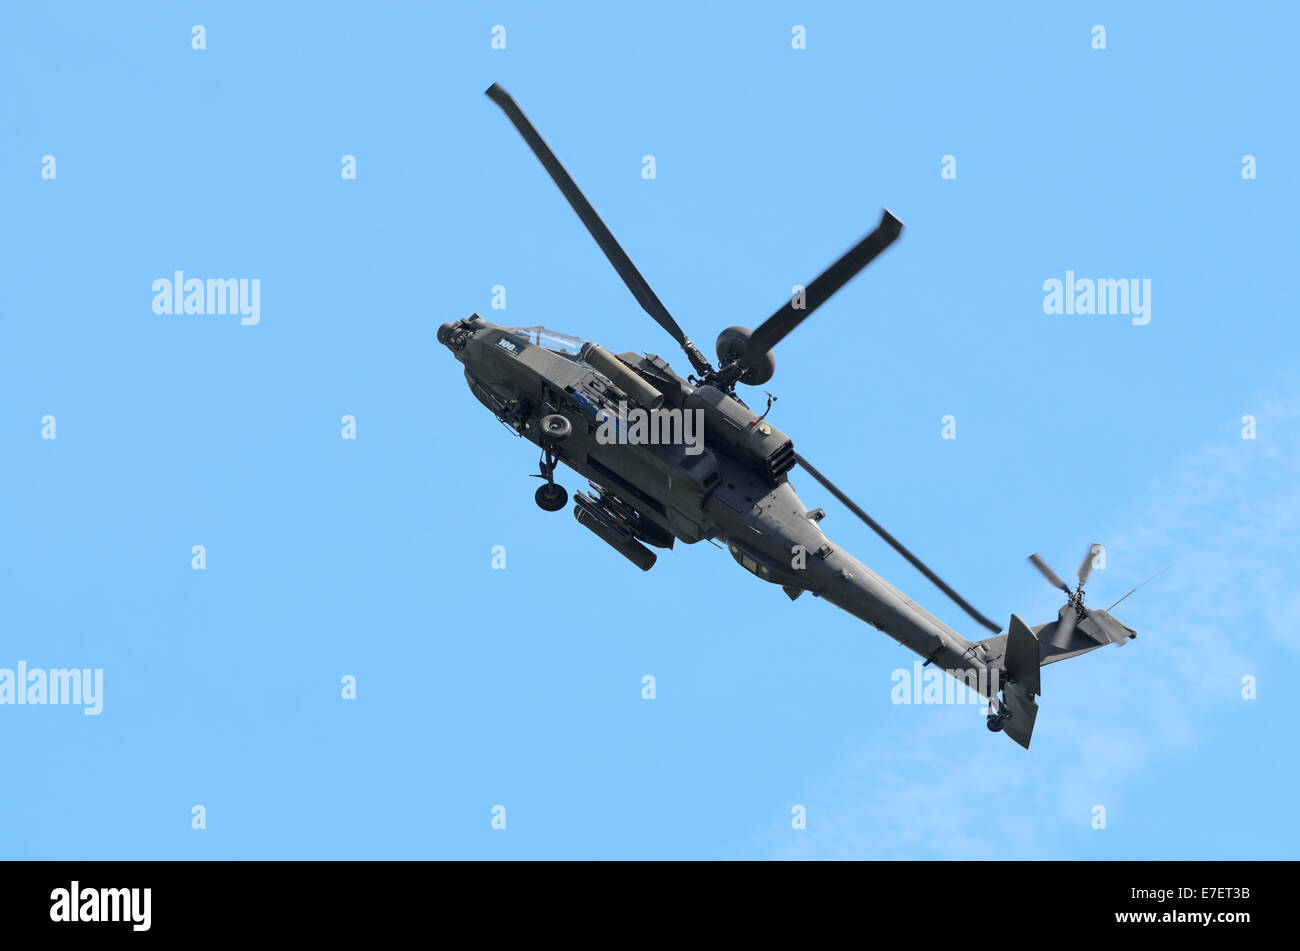 DUXFORD, CAMBRIDGESHIRE, ENGLAND - 25 Mai: AH-64 Apache Hubschrauber klettern nach Angriff auf IWM Duxford Airshow am 25. Mai 2014 Stockfoto